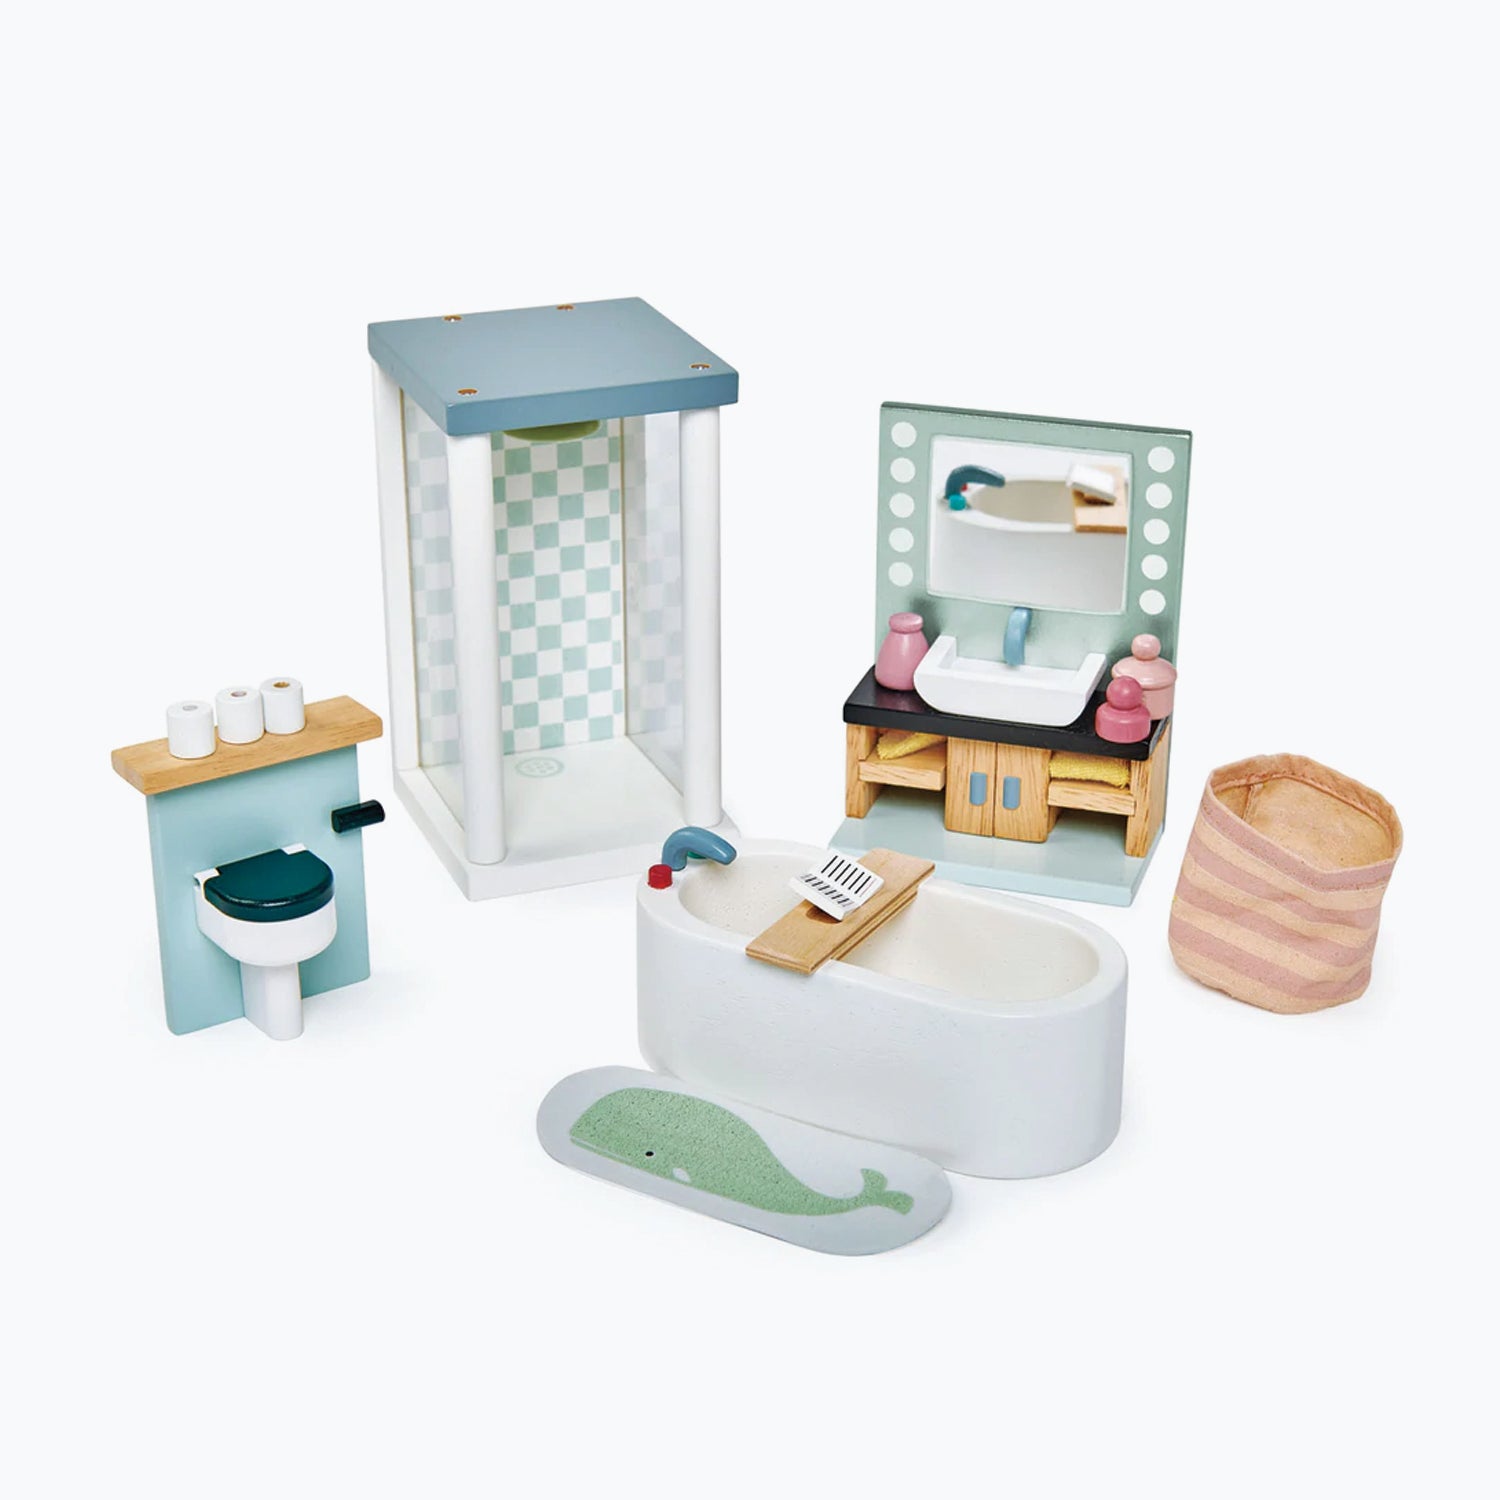 An image of Tender Leaf Dollhouse Bathroom Furniture - Dollhouse Furniture - Miniture Bathro...